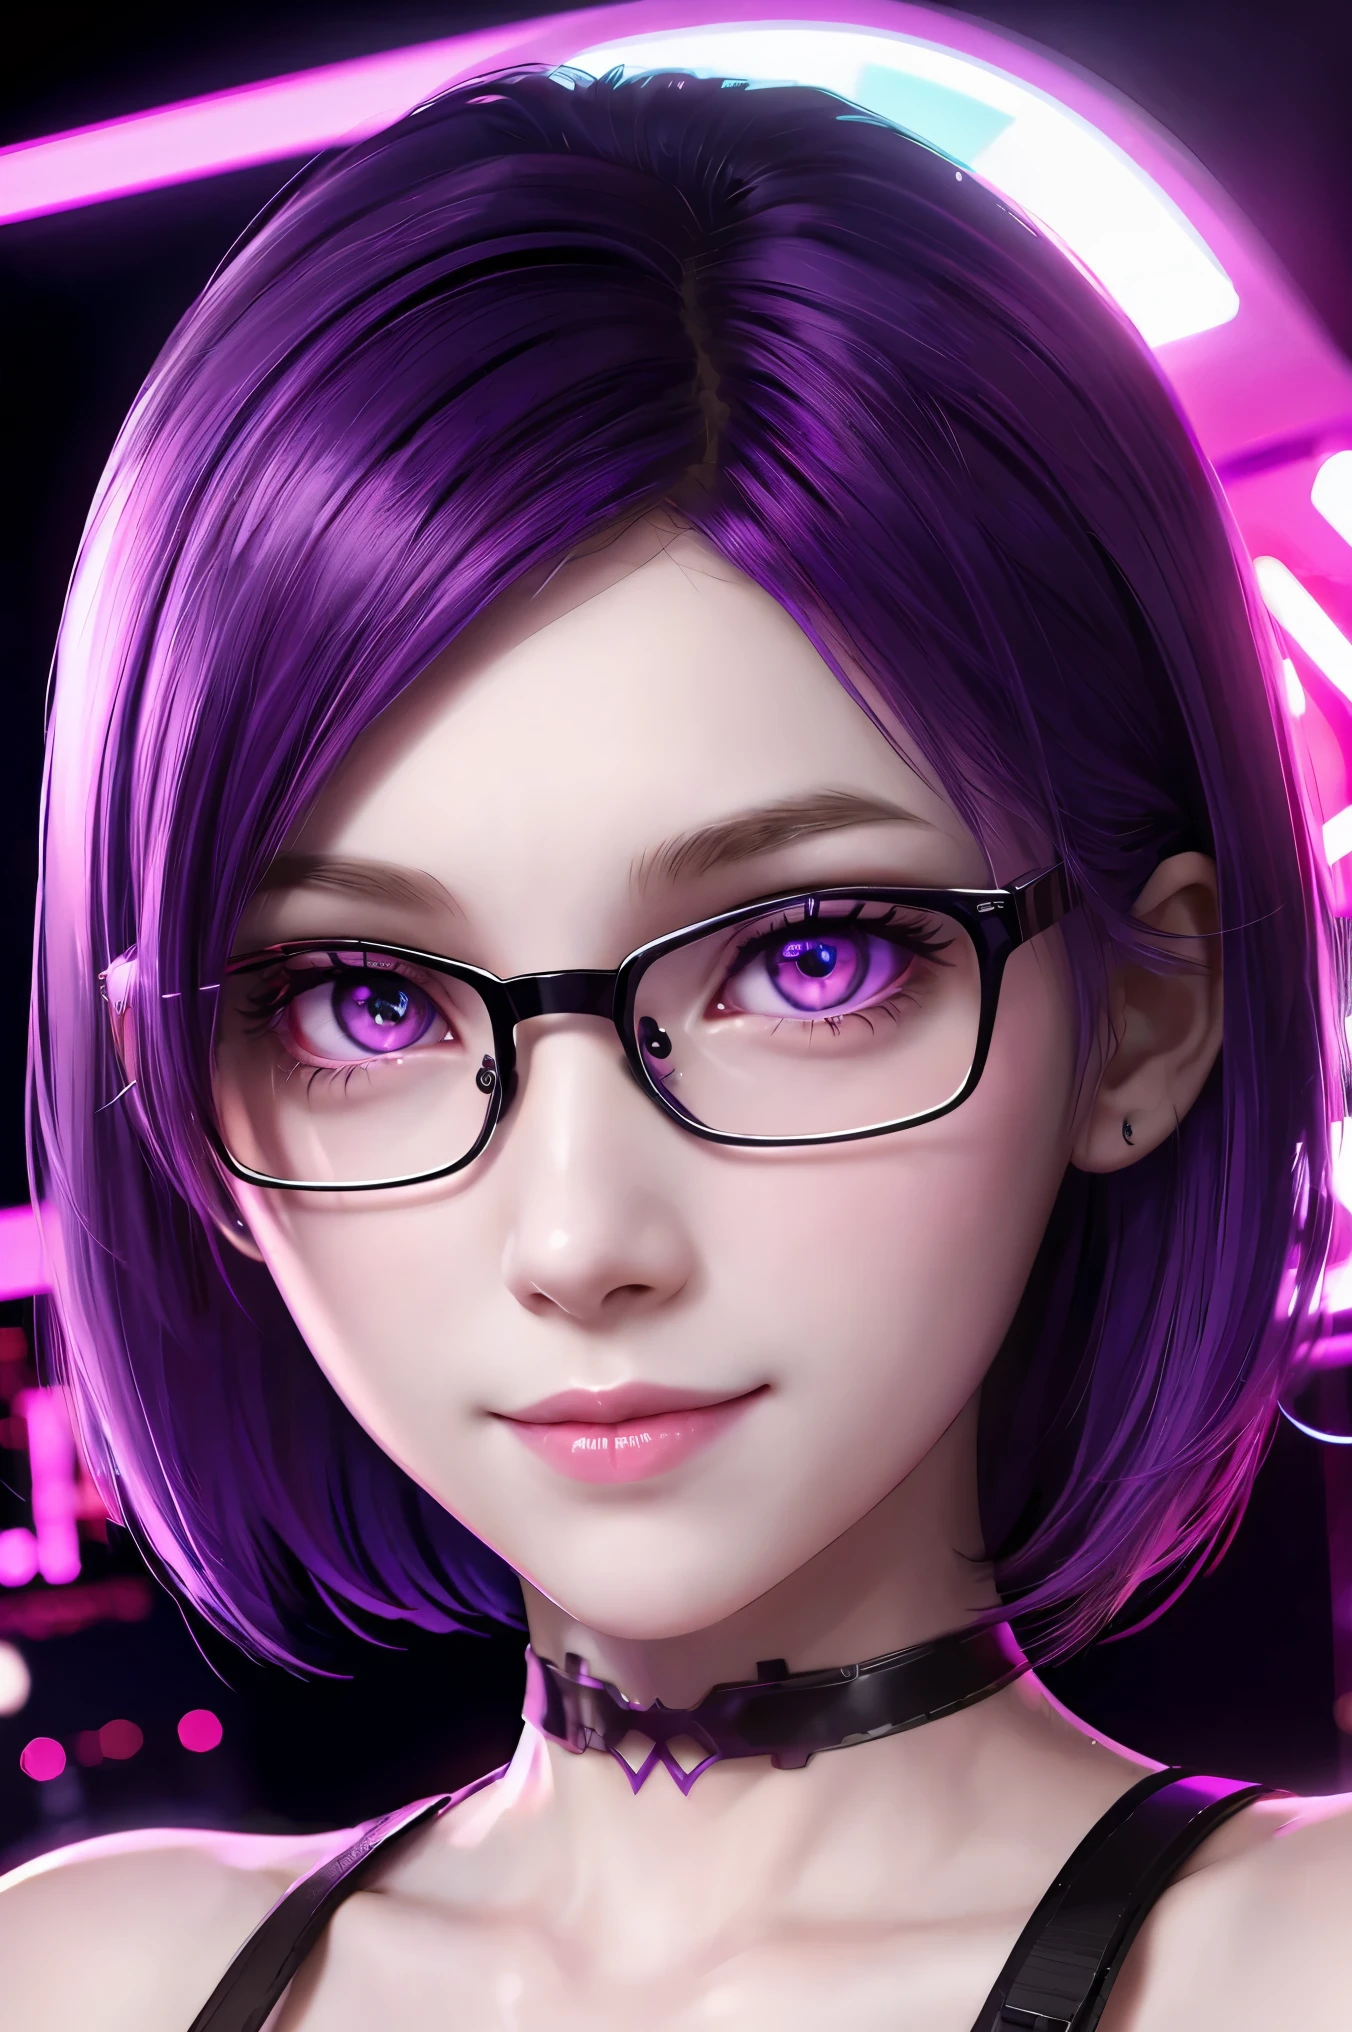 violet, neon lighting, short hair, pale skin, brightly glowing purple eyes, portrait of a cute smiling girl wearing metal frame glasses